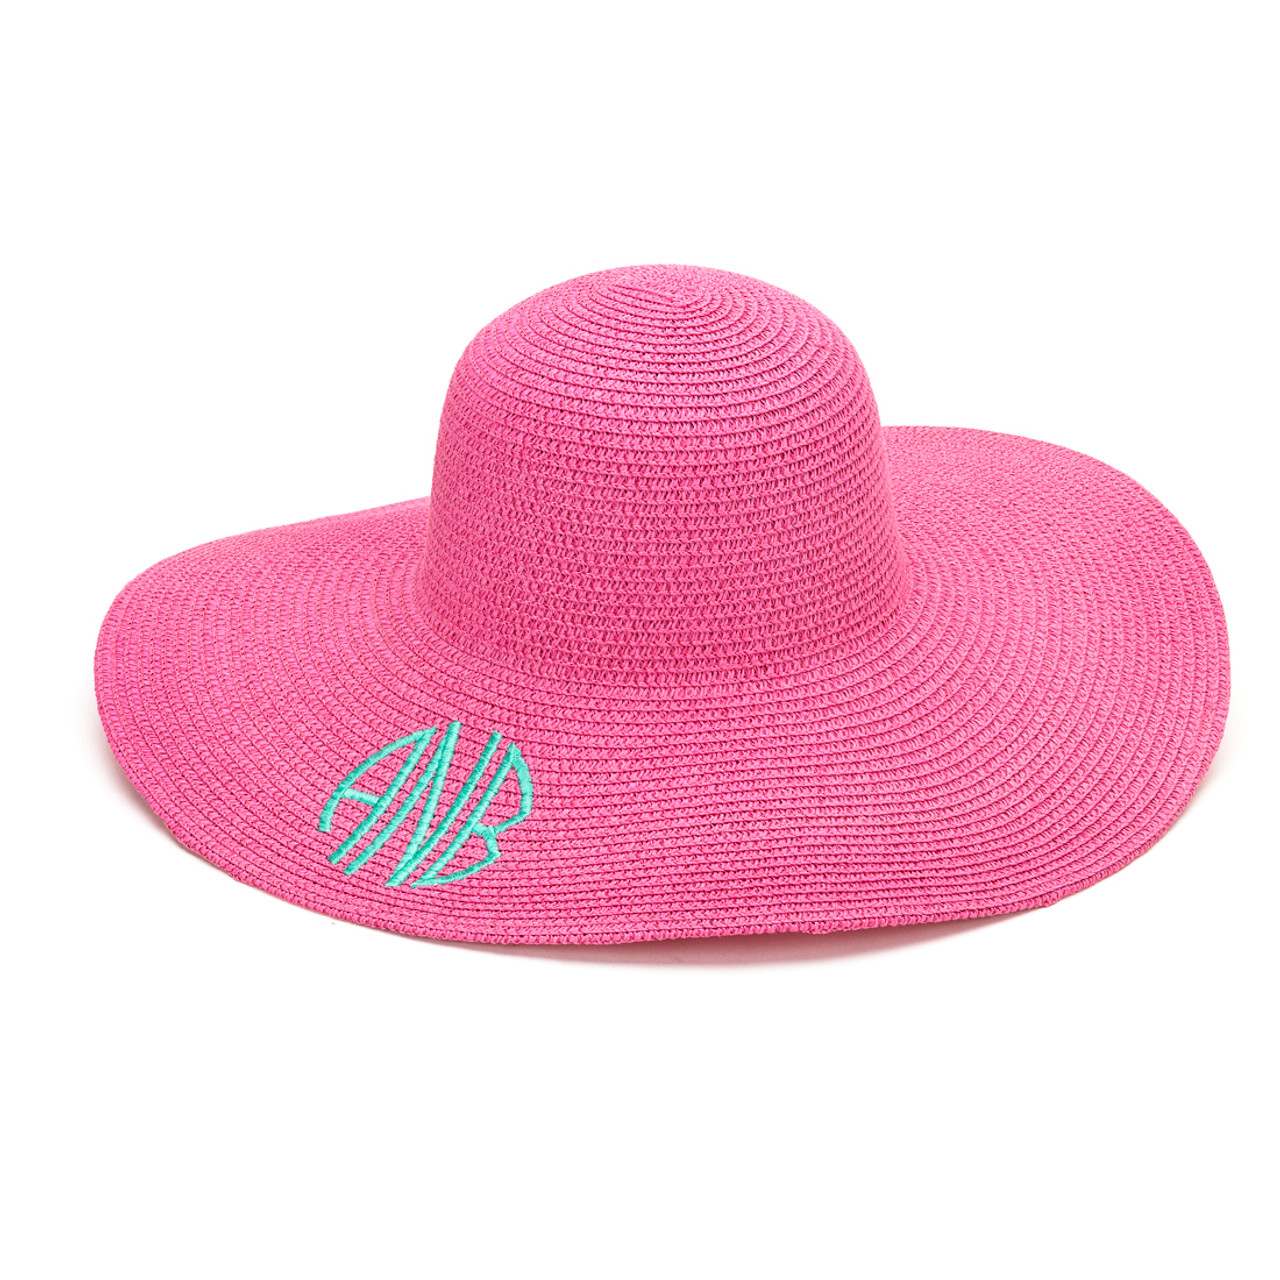 Hot Pink adult Floppy Sun Hat